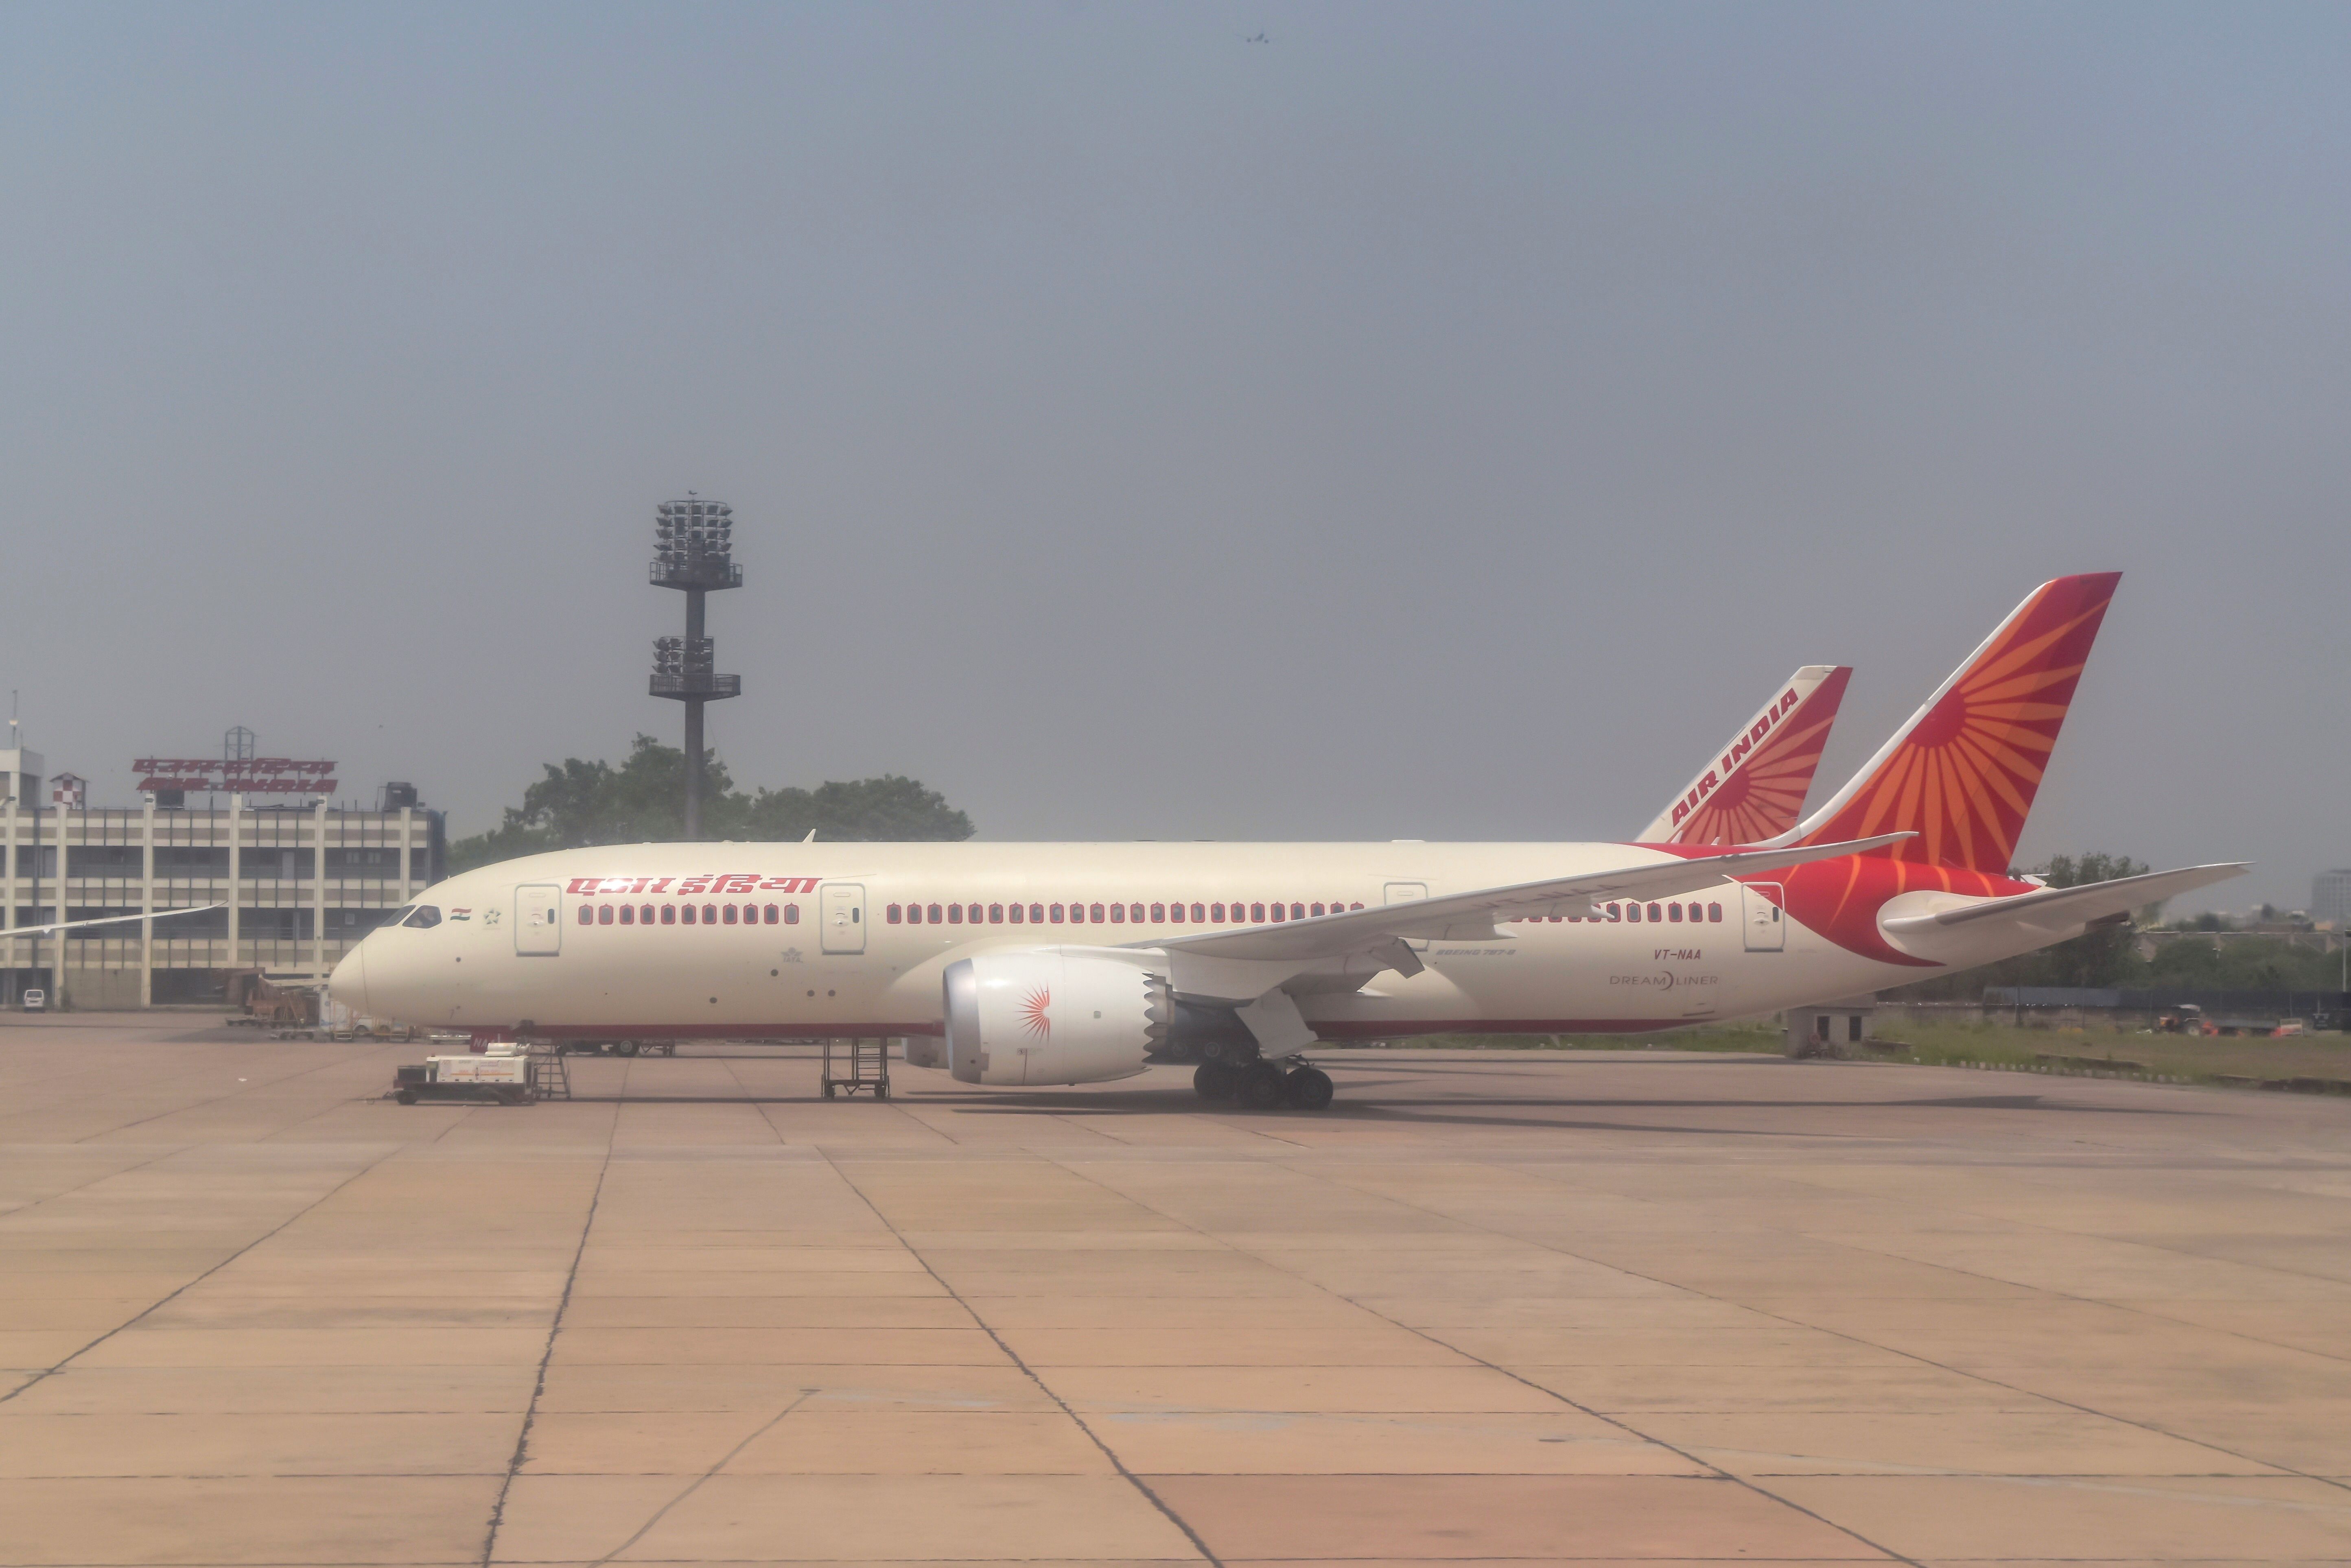 shutterstock_1096006166 - Delhi: May 2018: Air India Airplane at Delhi Airport. (Boeing 787 Dreamliner)